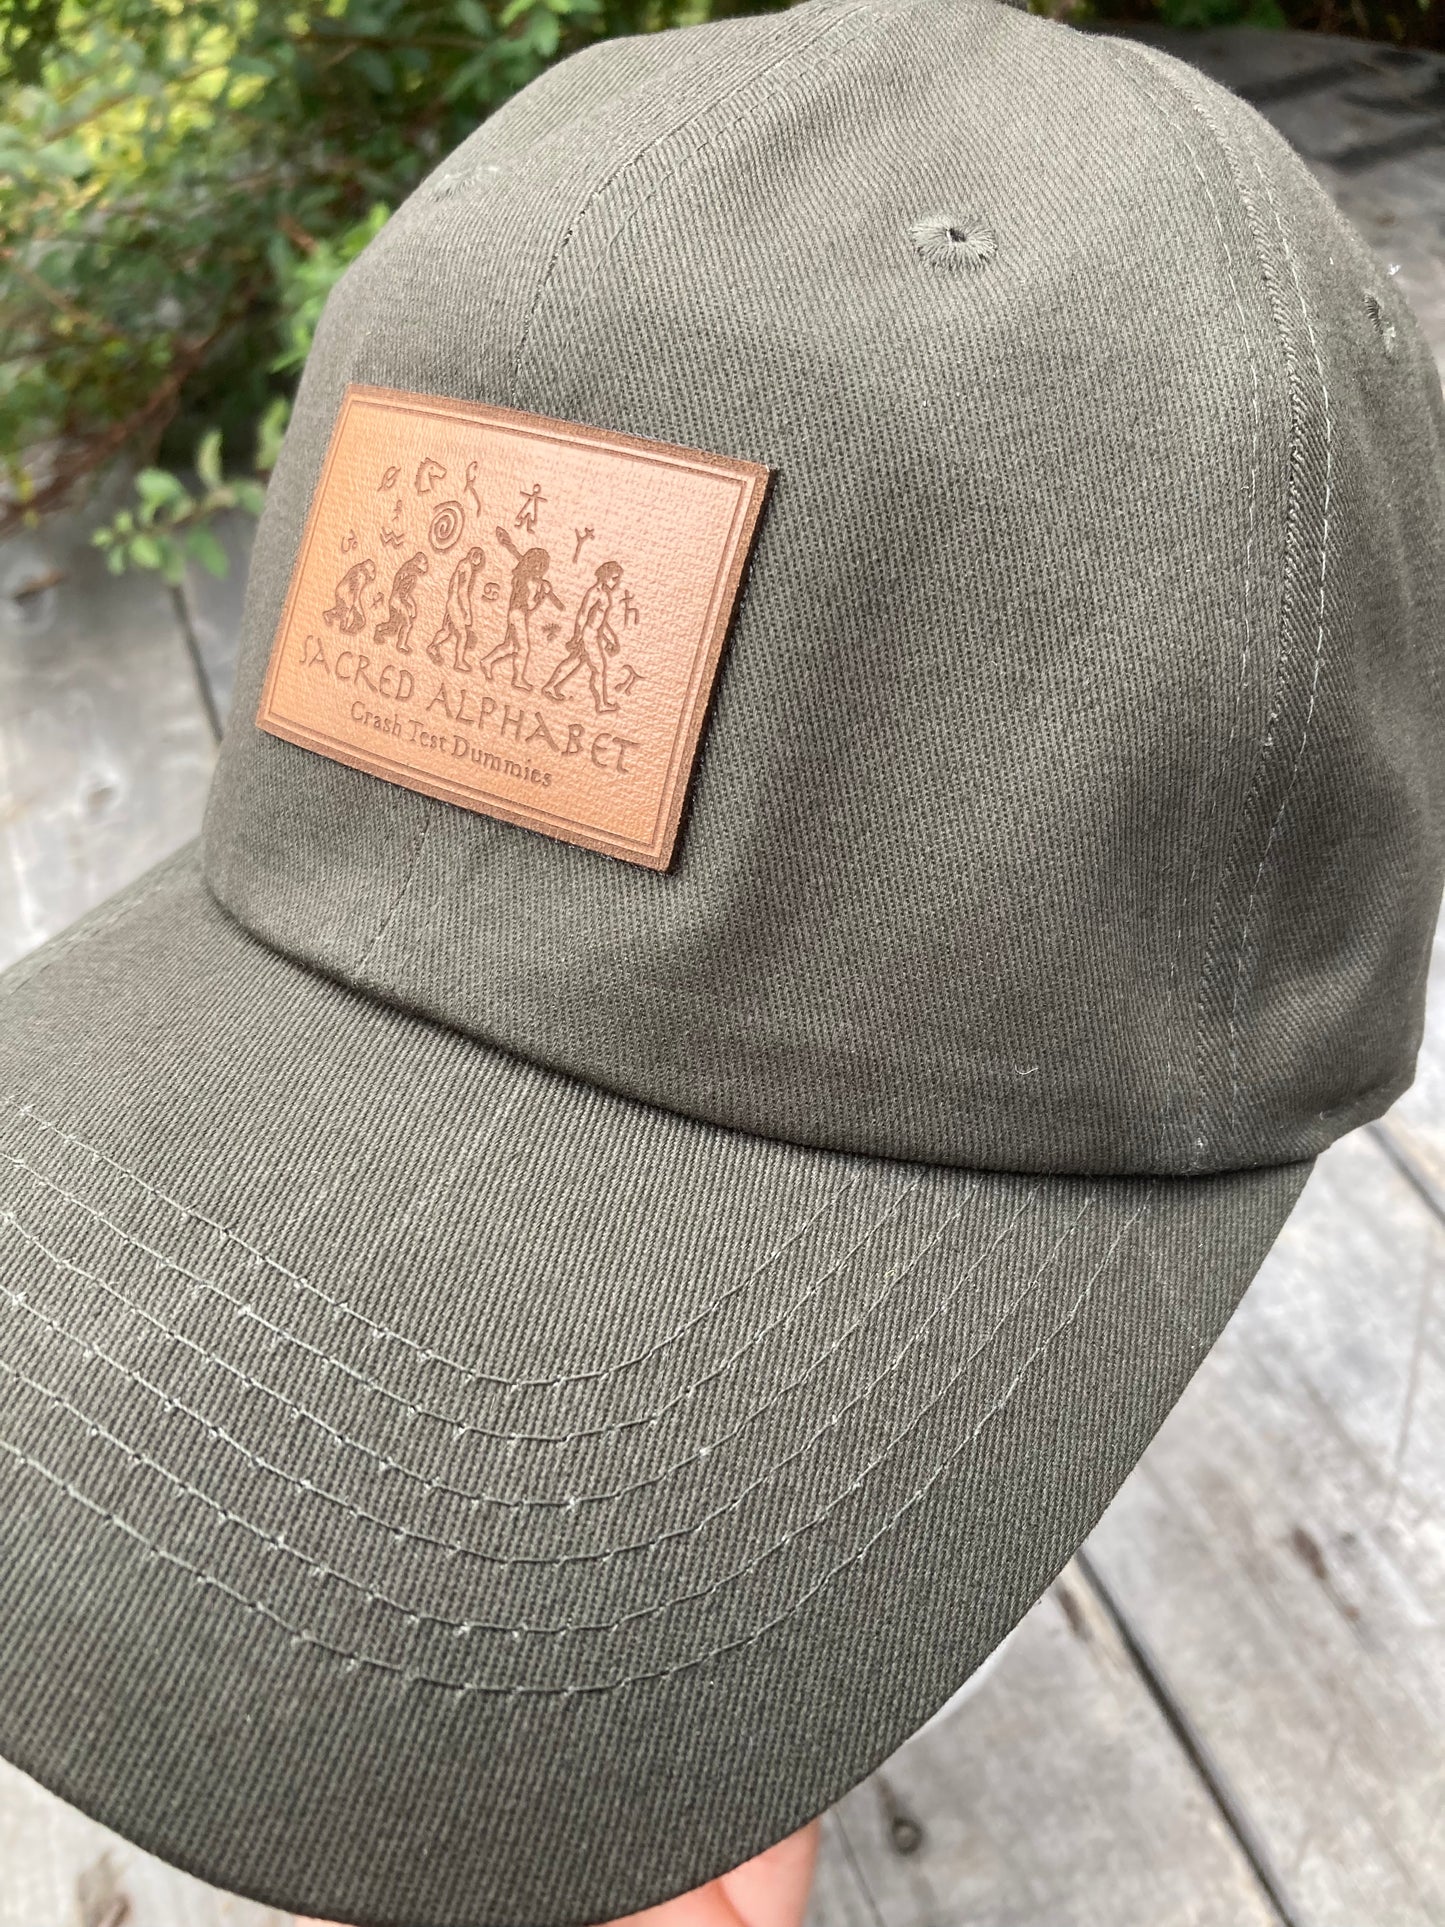 Sacred Alphabet Leather Patch Dad Hat (Olive)